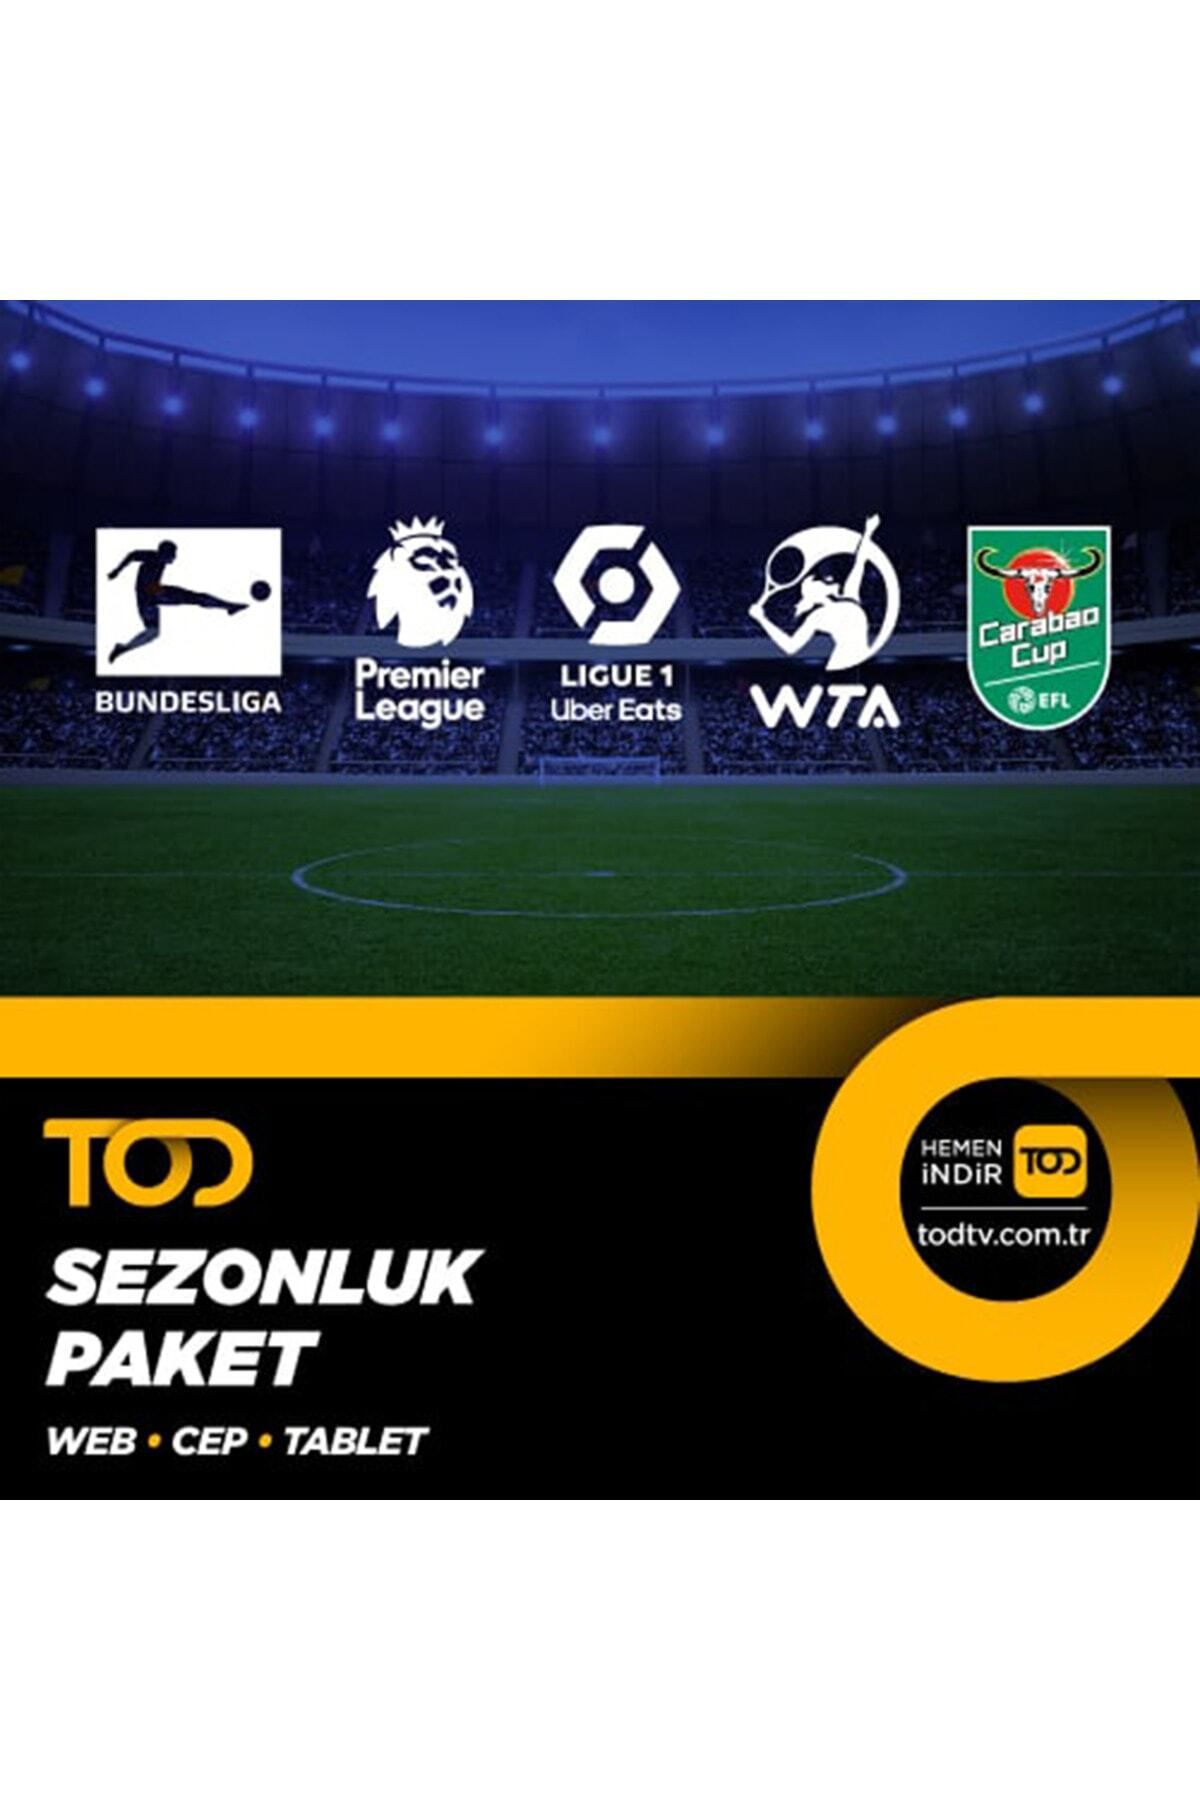 TOD TV Sezonluk Spor Extra+ Paketi - (web + Cep + Tablet)